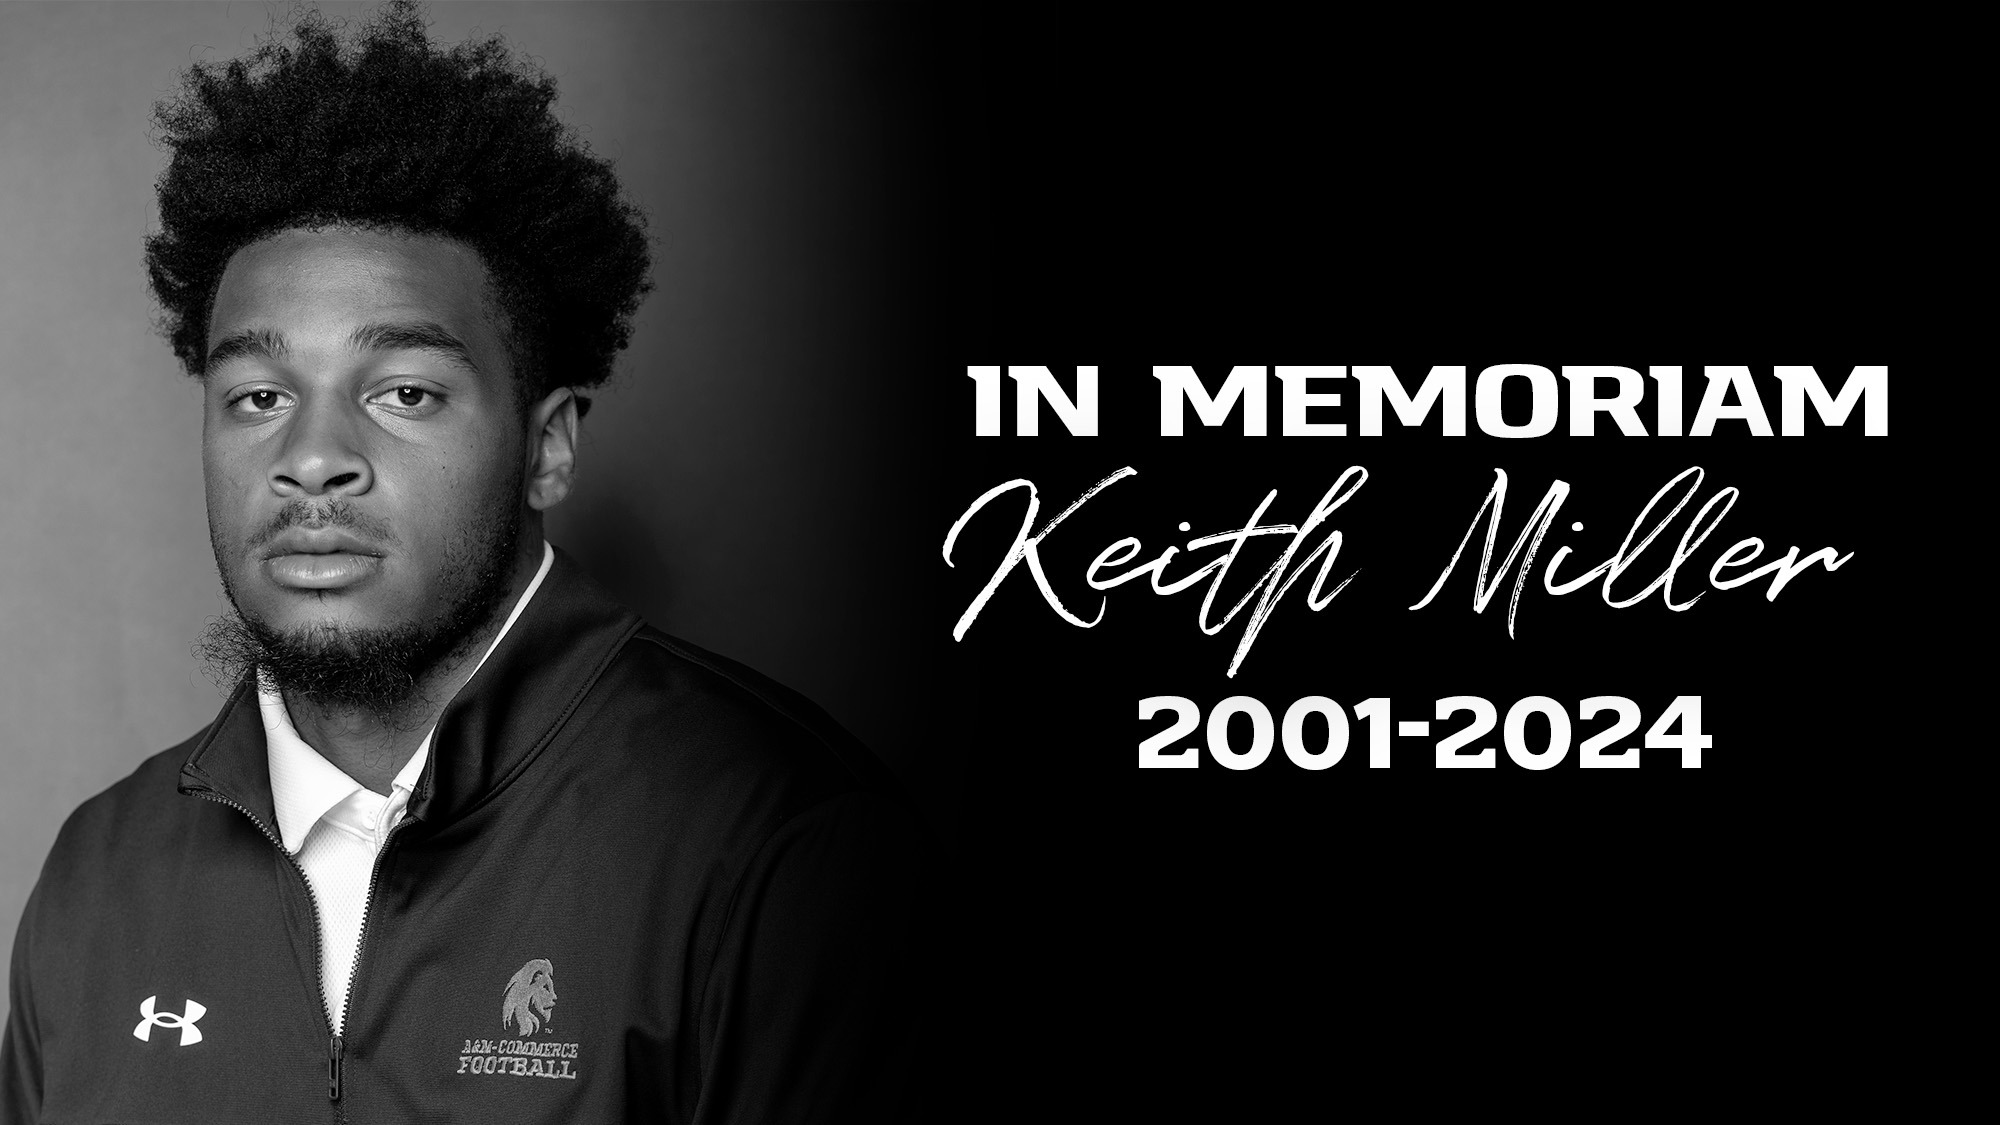 Keith Miller In Memoriam